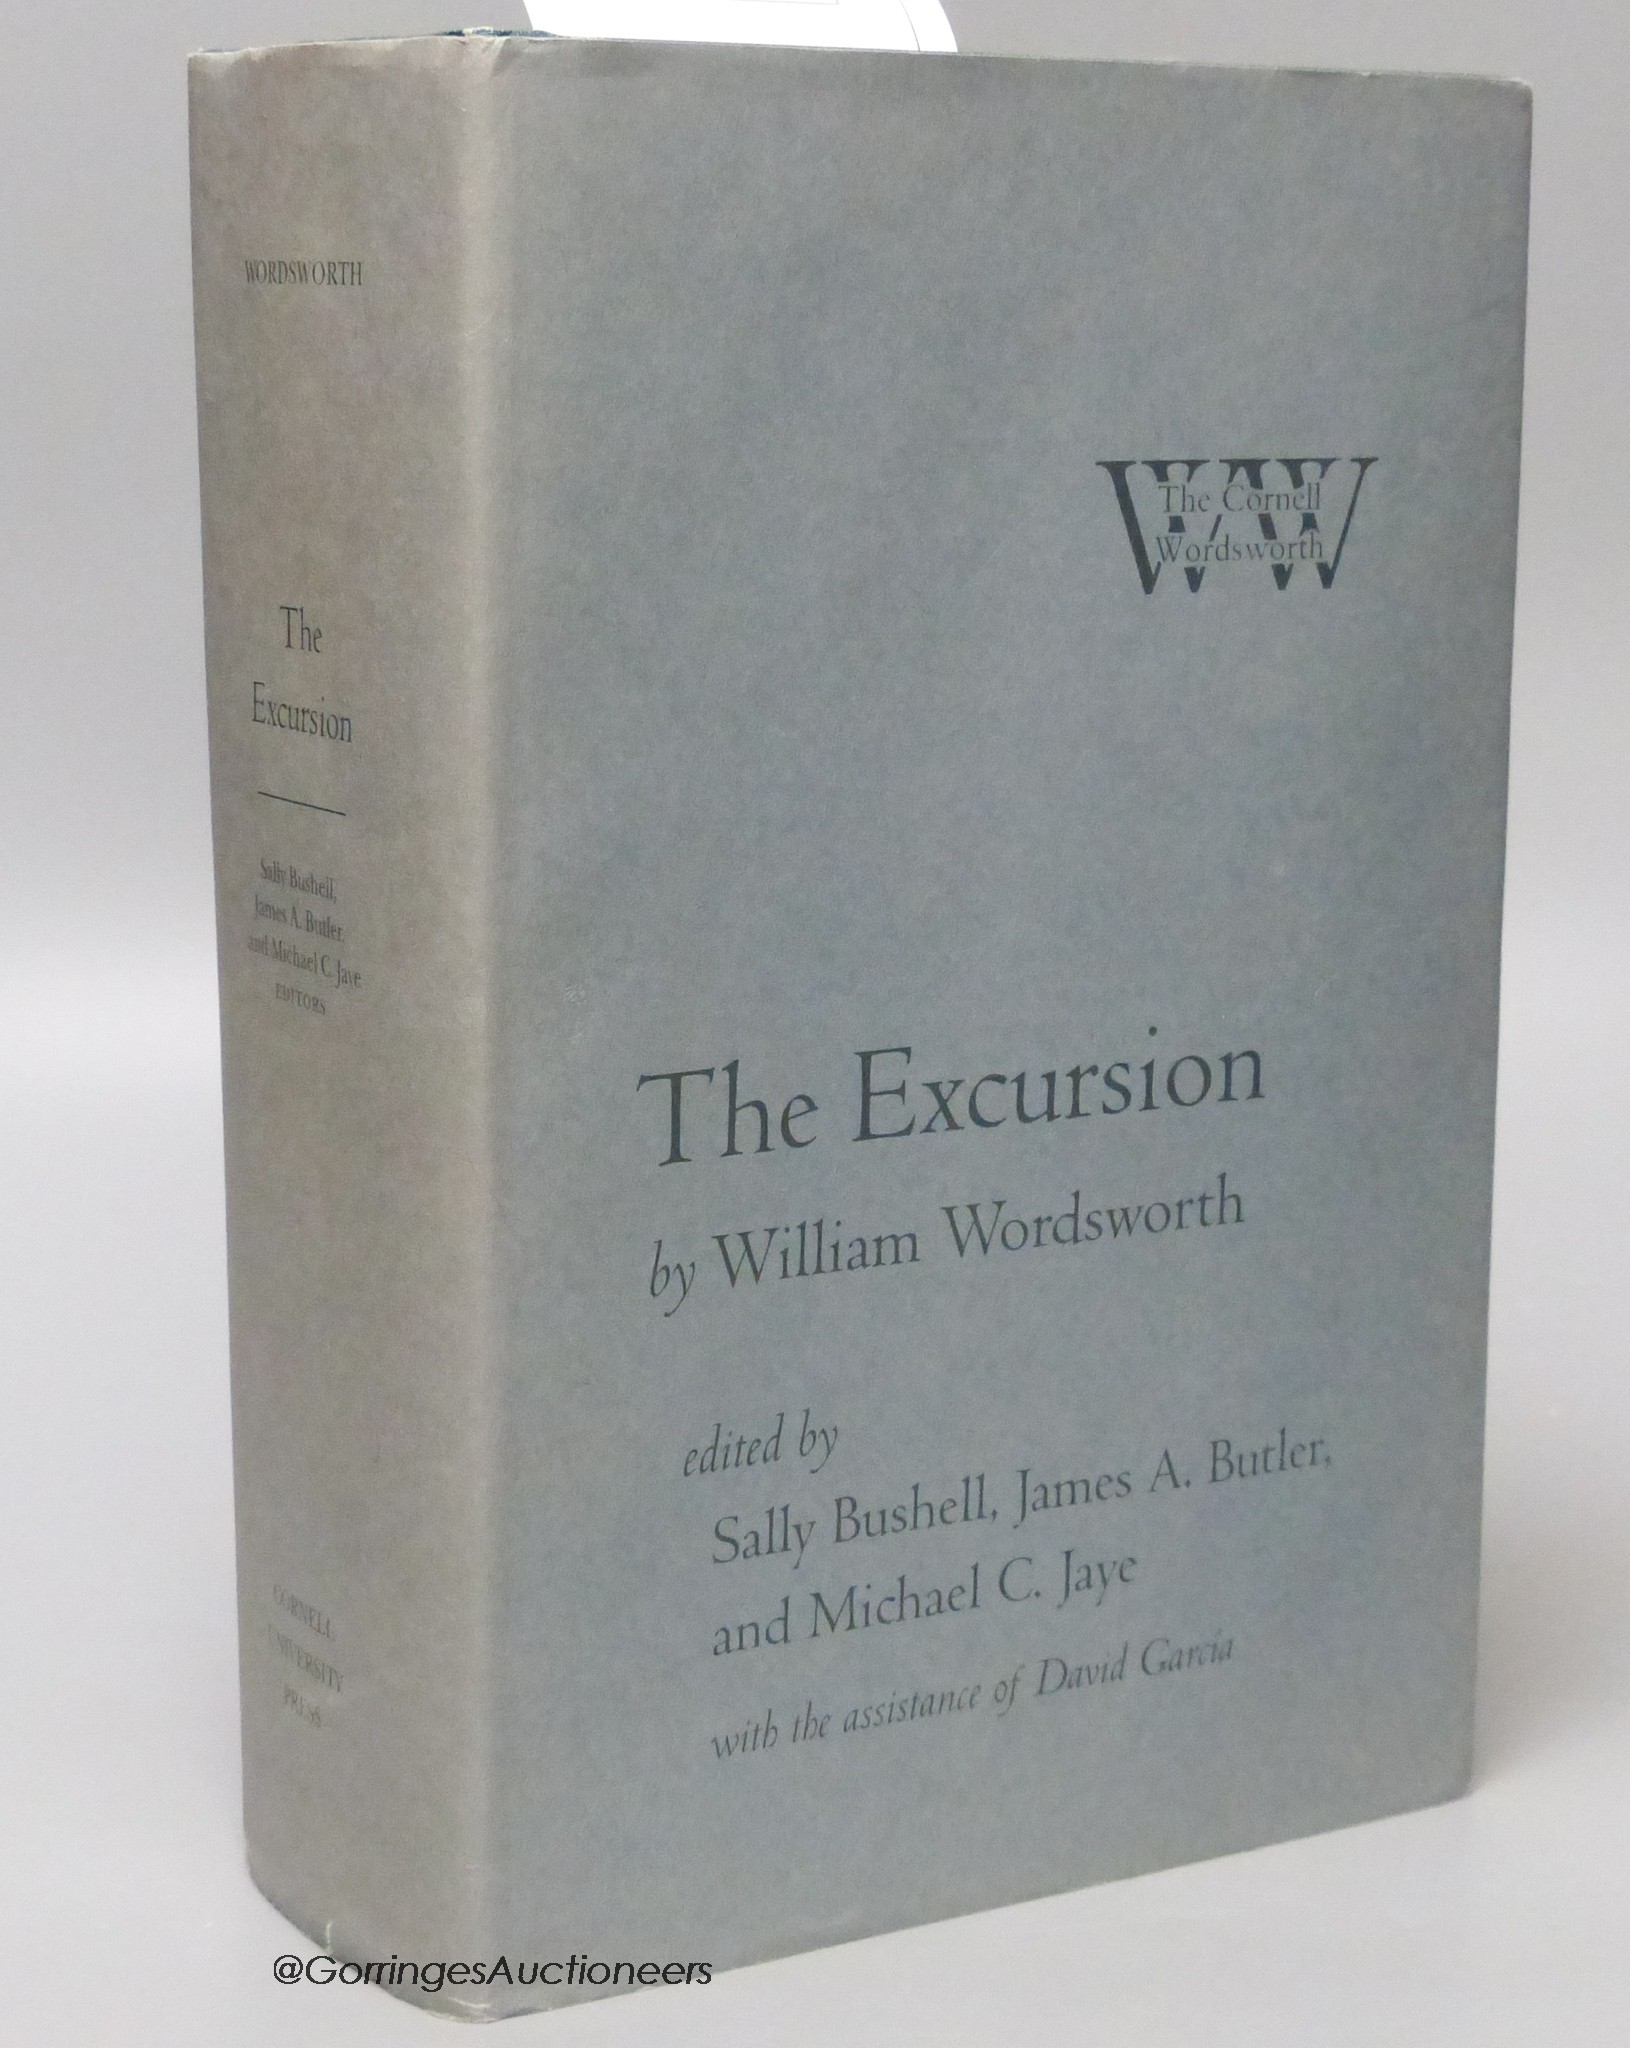 Wordsworth, William- The Excursion (The Cornell Wordsworth), qto, green cloth with dj, Cornell University, 2007